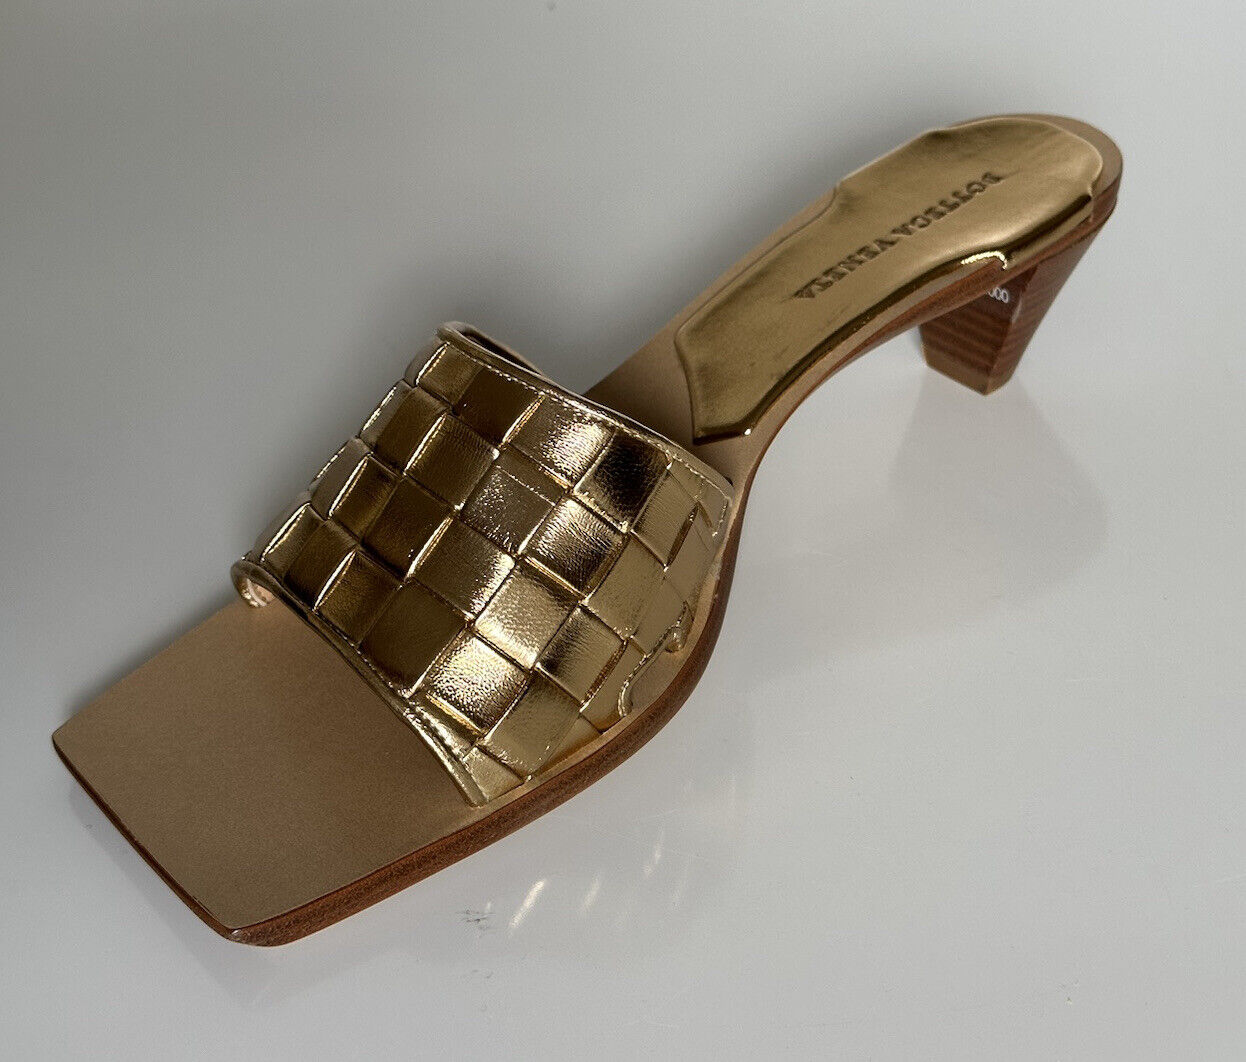 NIB $720 Bottega Women's Leather Gold Peach Heel Sandals 11 US 578373 IT